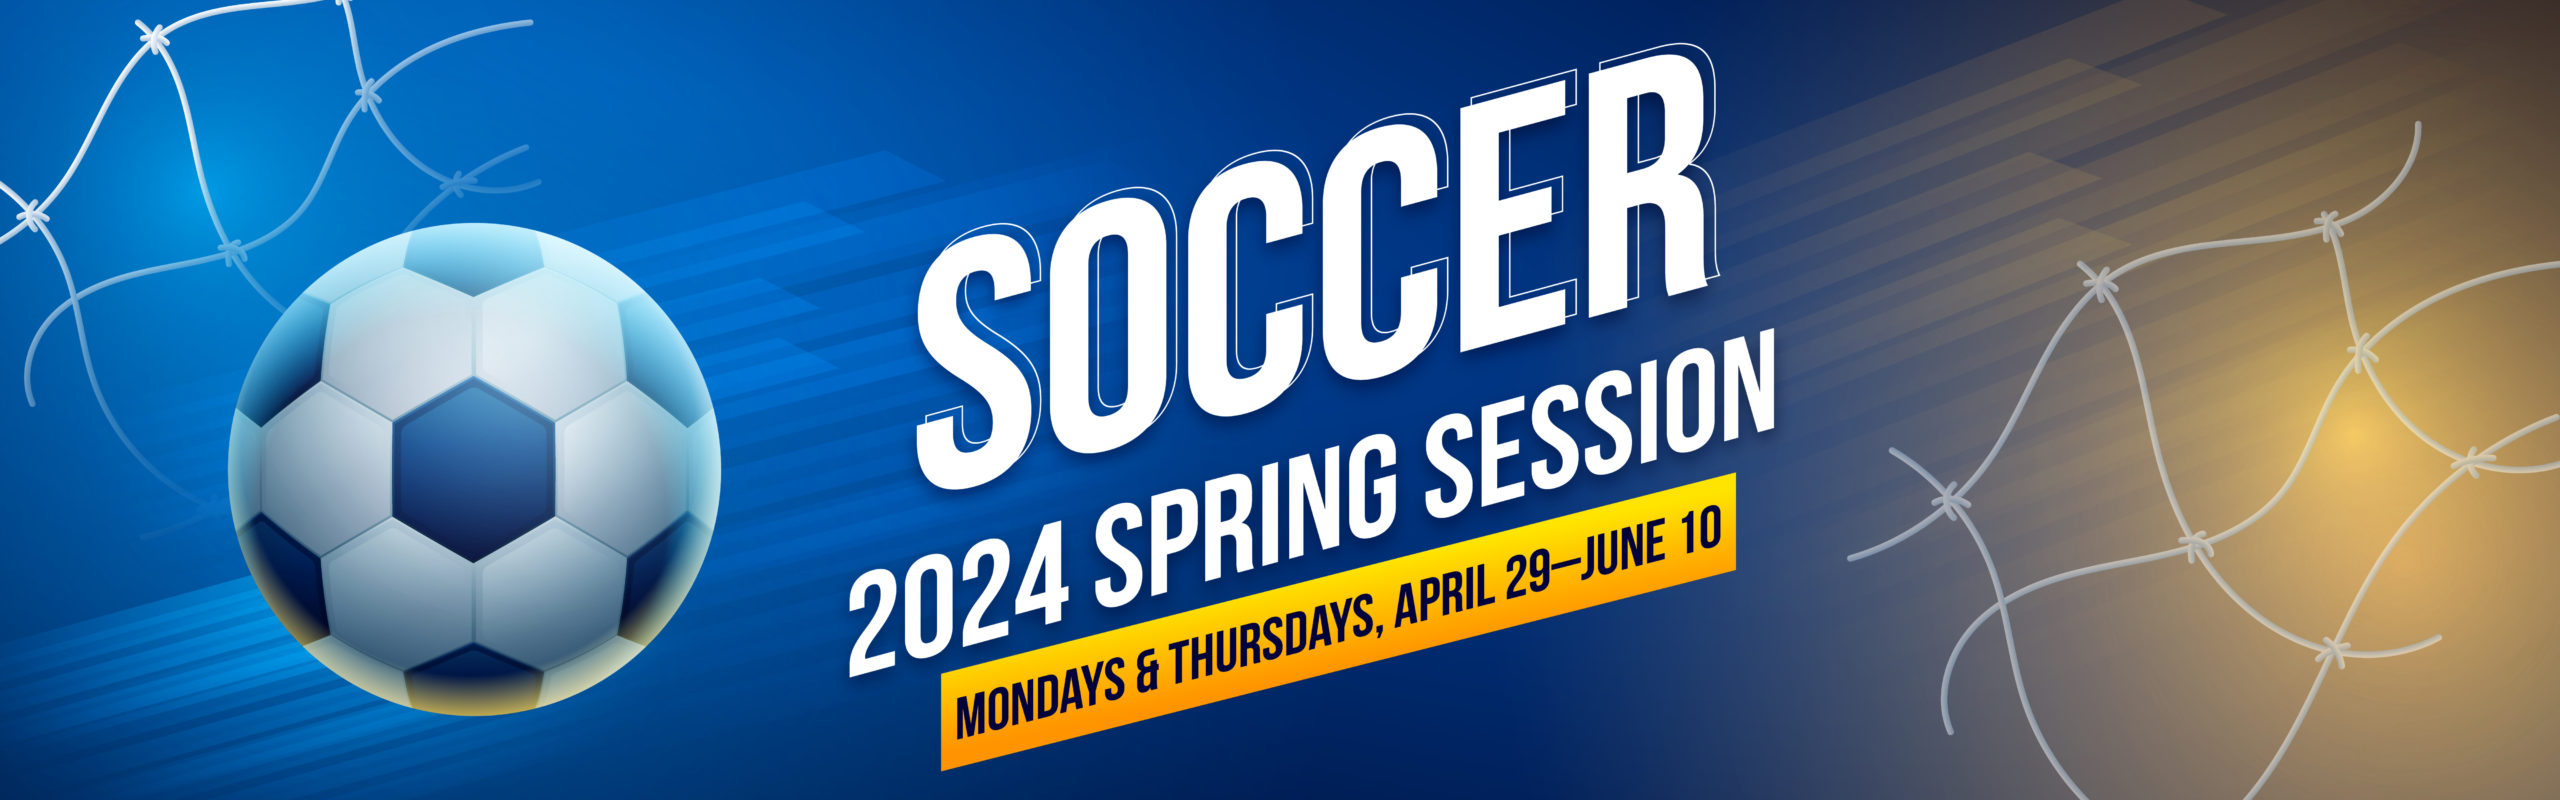 Spring Soccer Program